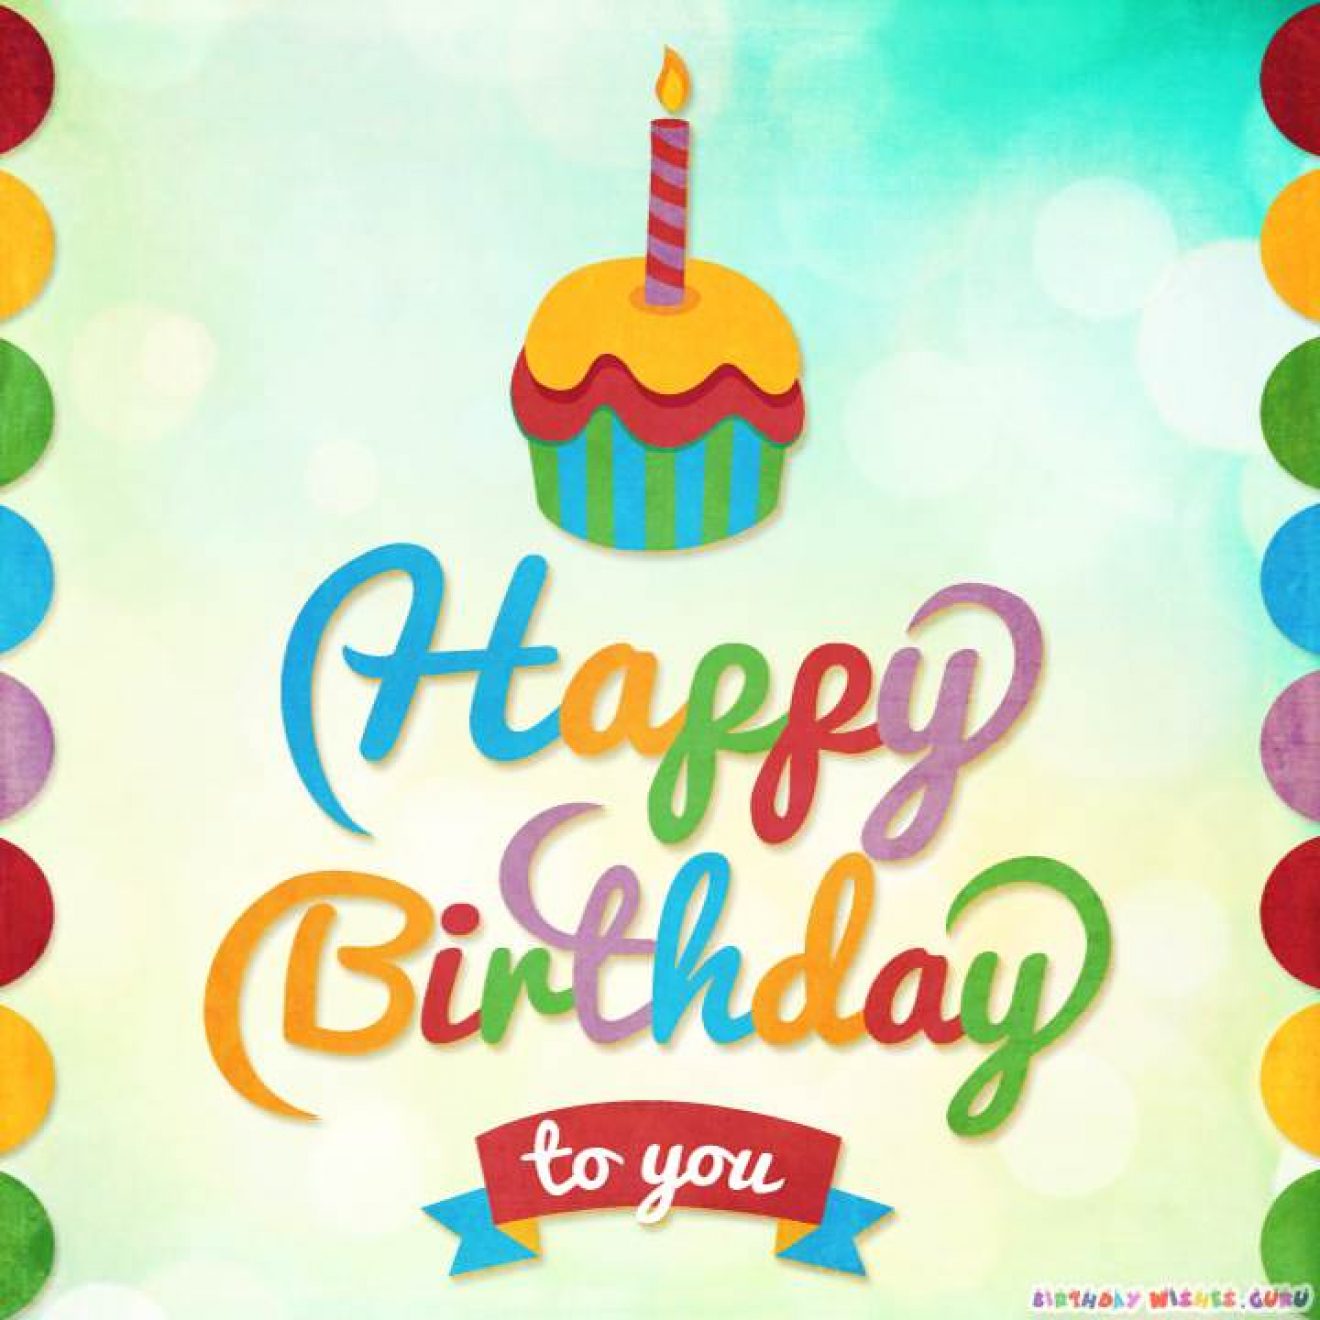 Happy Birthday Wishes For Someone Special By Birthday Wishes Guru